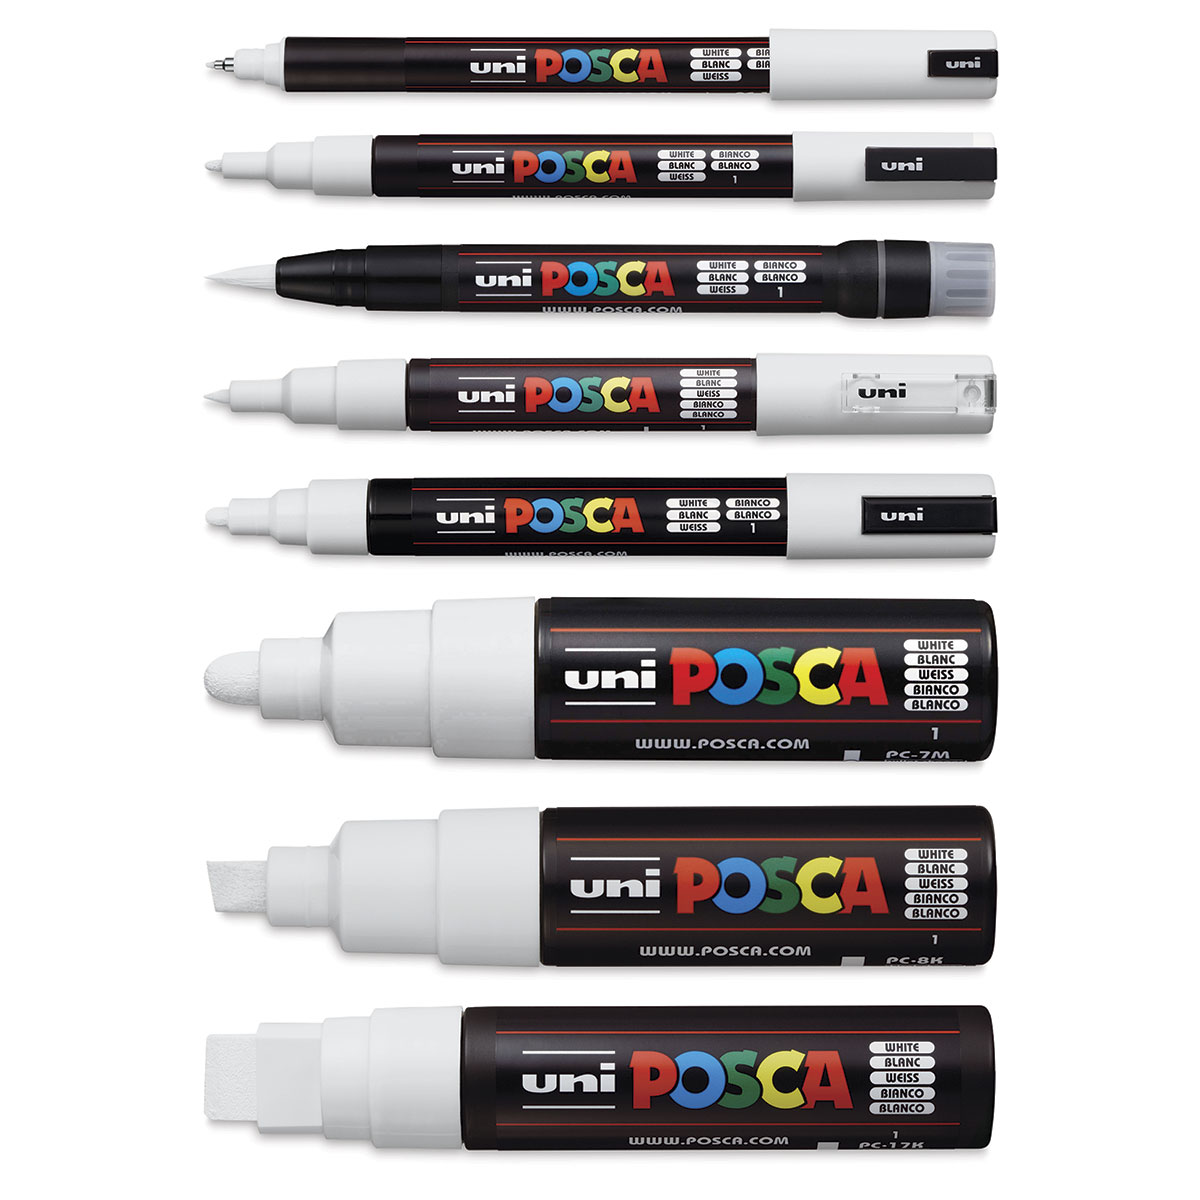 Posca Paint Pen - Black and White set – ART QUILT SUPPLIES - 2 Sew